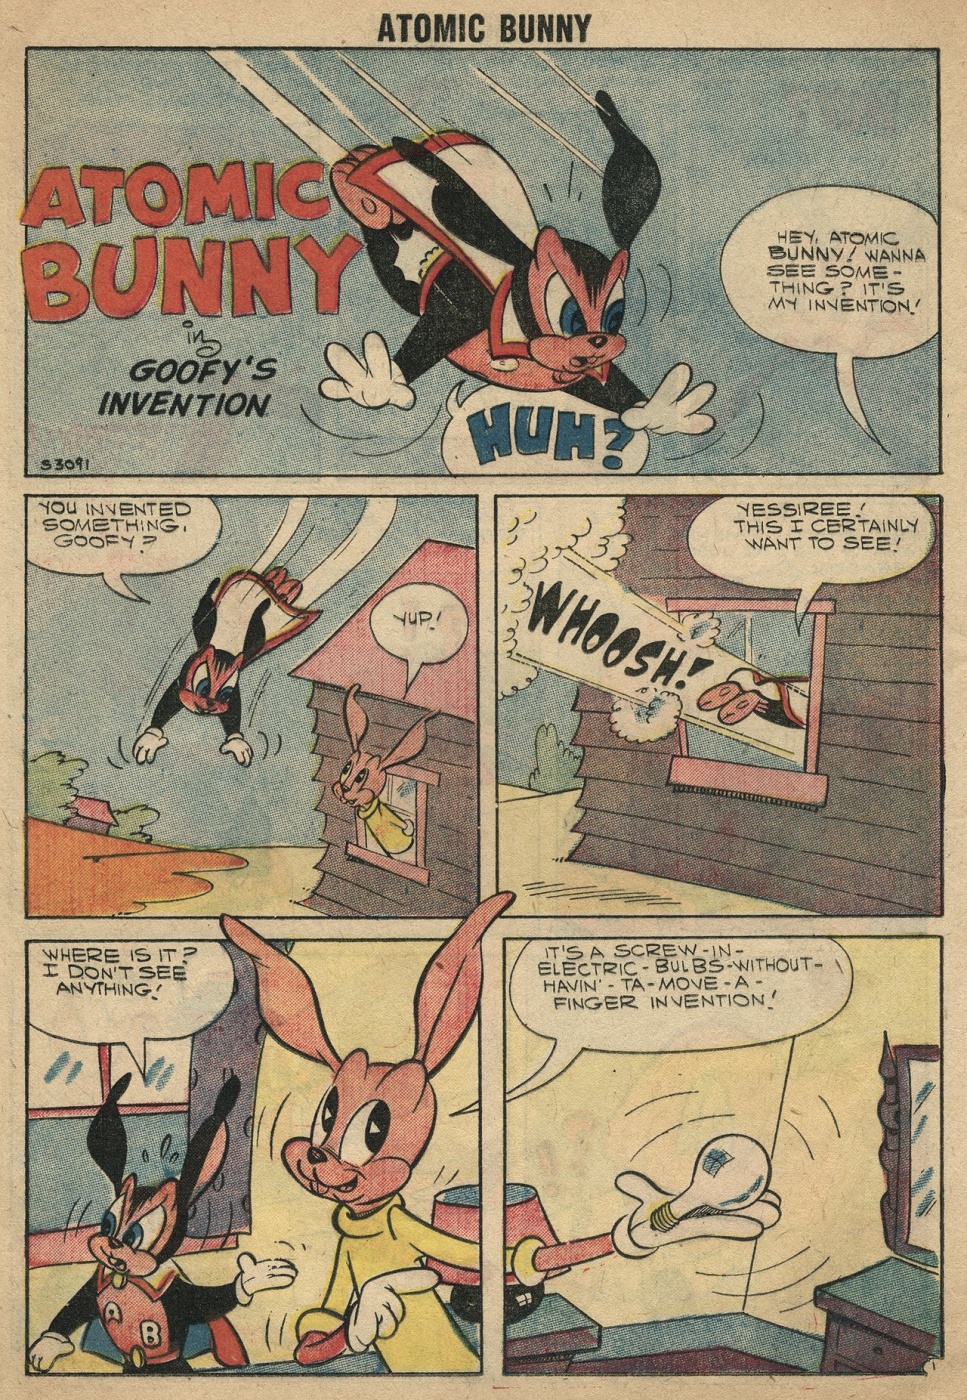 Atomic-Bunny-Comic-Strips (12)